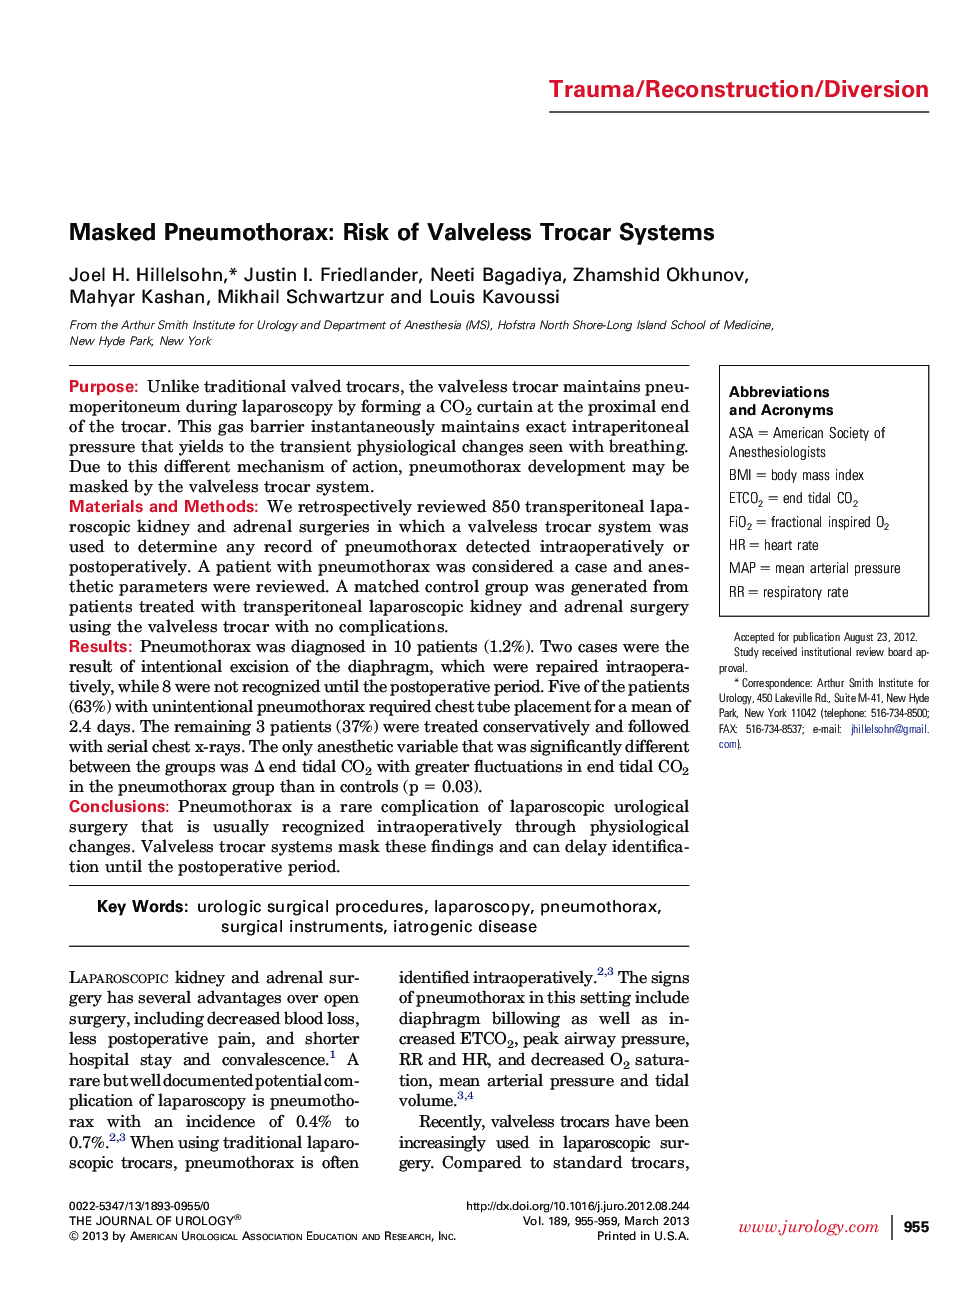 Masked Pneumothorax: Risk of Valveless Trocar Systems 